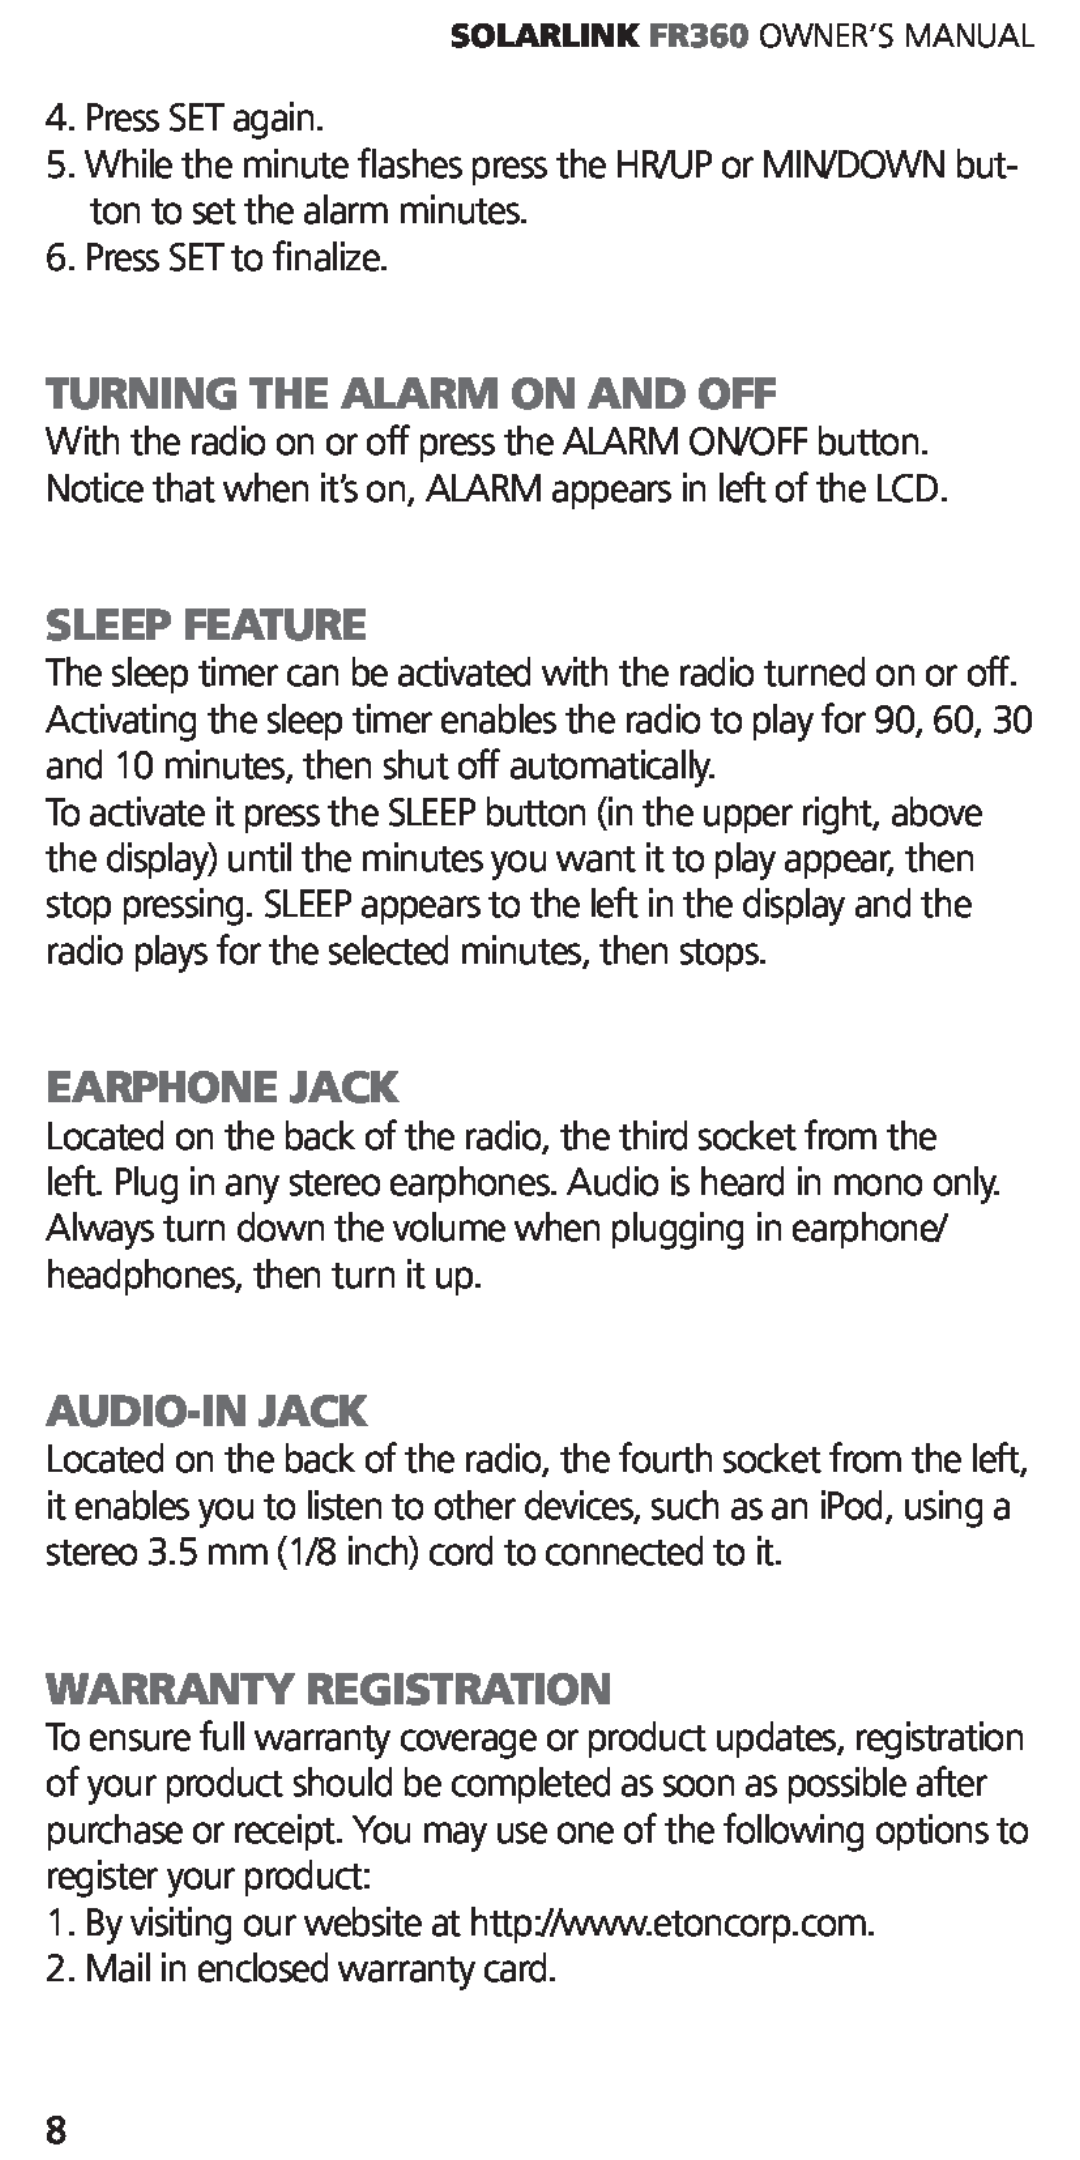 Eton ARCFR360WXR RED Turning The Alarm On And Off, Sleep Feature, Earphone Jack, Audio-Injack, Warranty Registration 